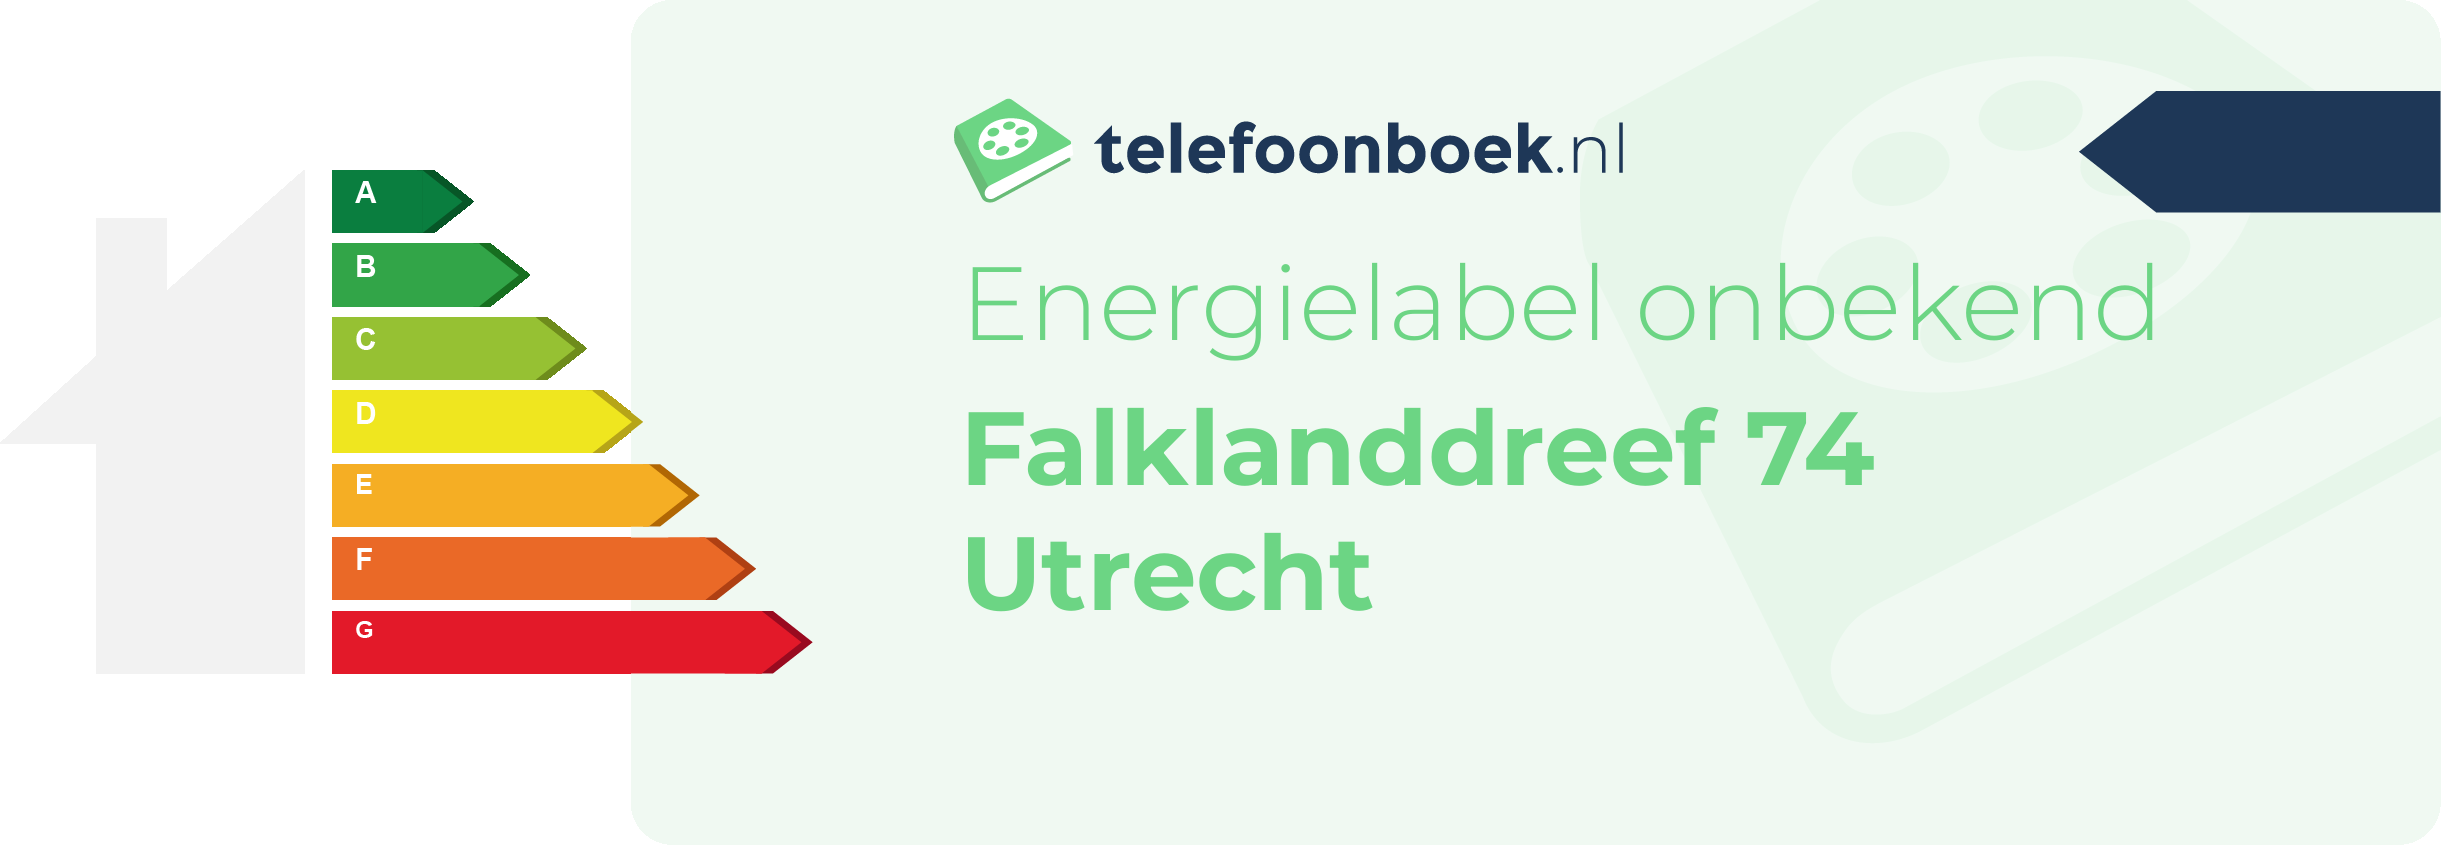 Energielabel Falklanddreef 74 Utrecht